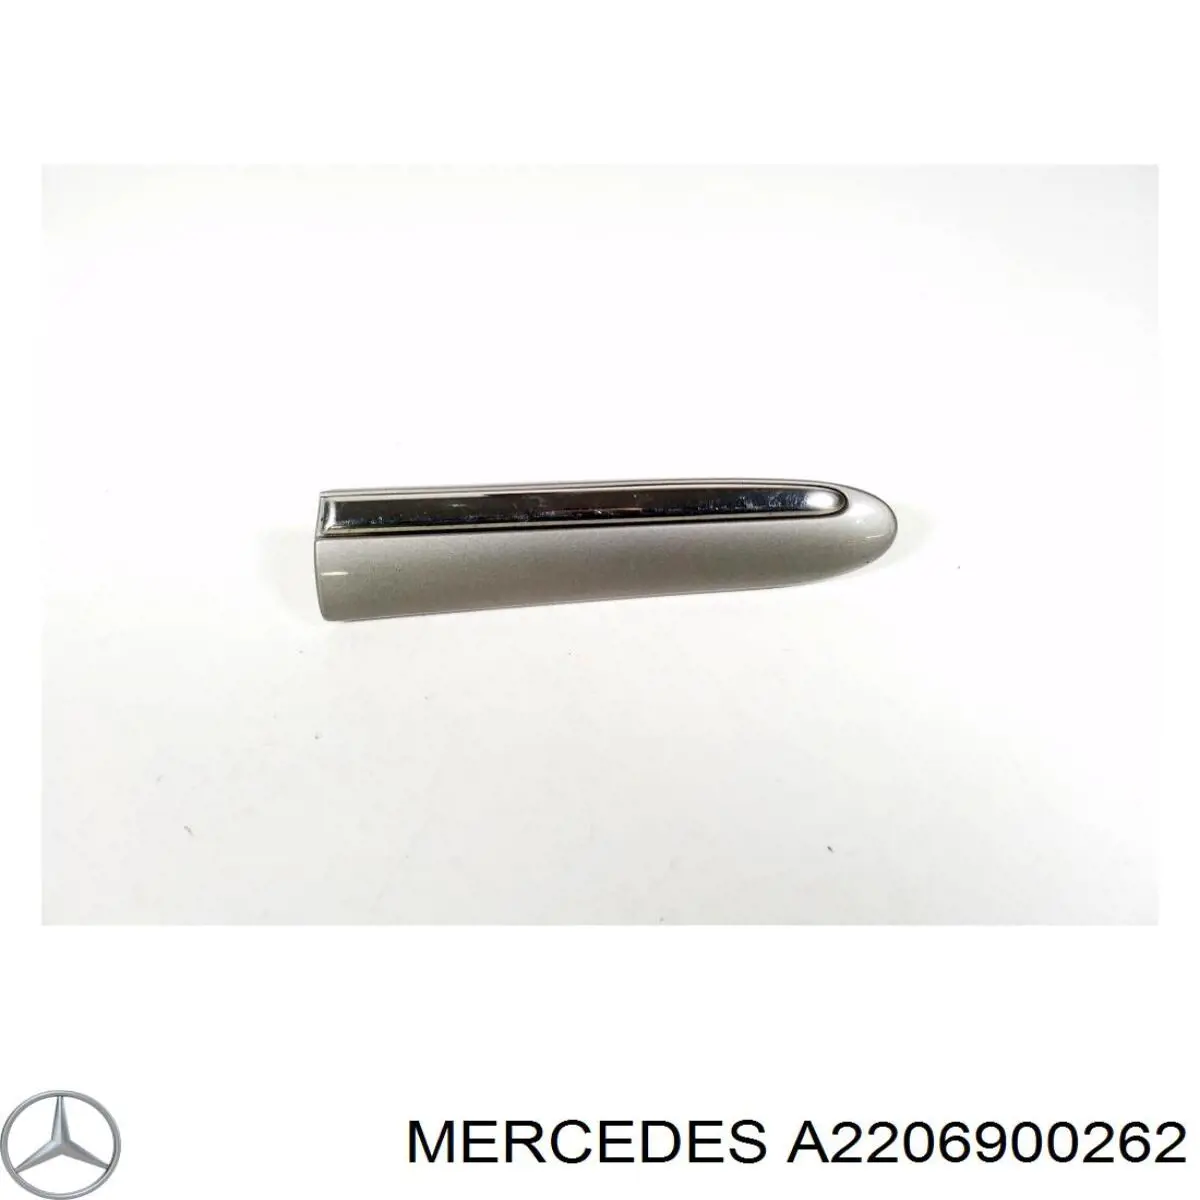 A2206900262 Mercedes moldura de guardabarro delantero derecho